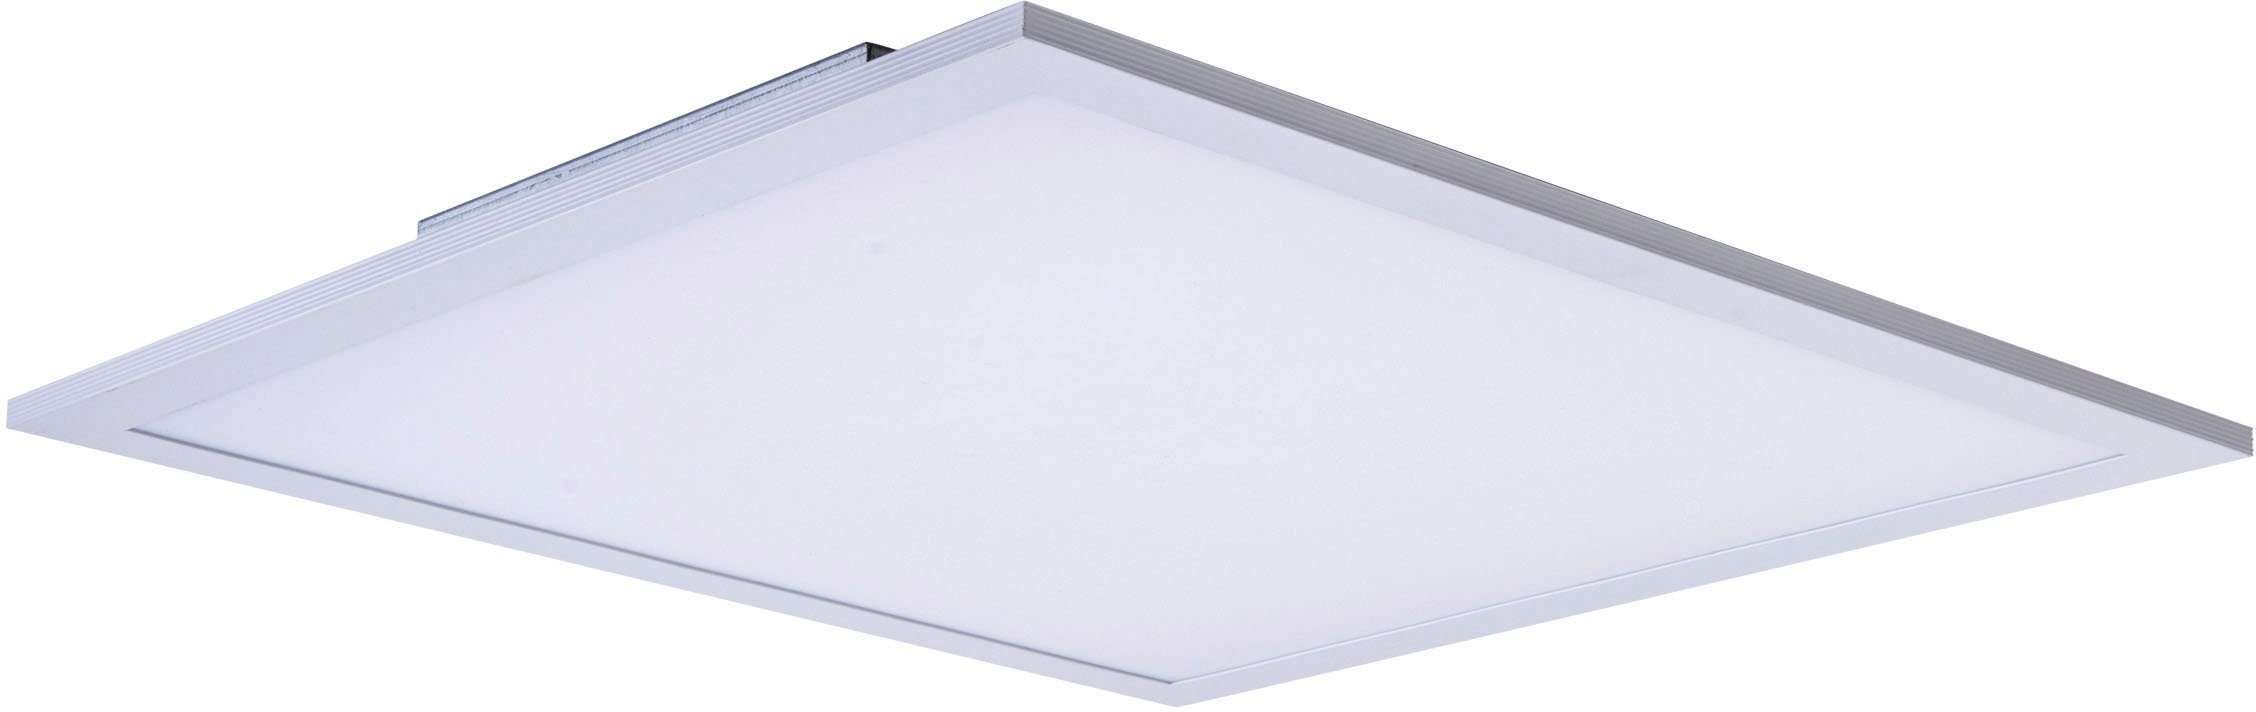 näve LED Panel Nicola, Lichtfarbe LED weiß 120 fest 45x45cm, neutralweiß H: 6cm, Aufbaupanel LED, Neutralweiß, integriert